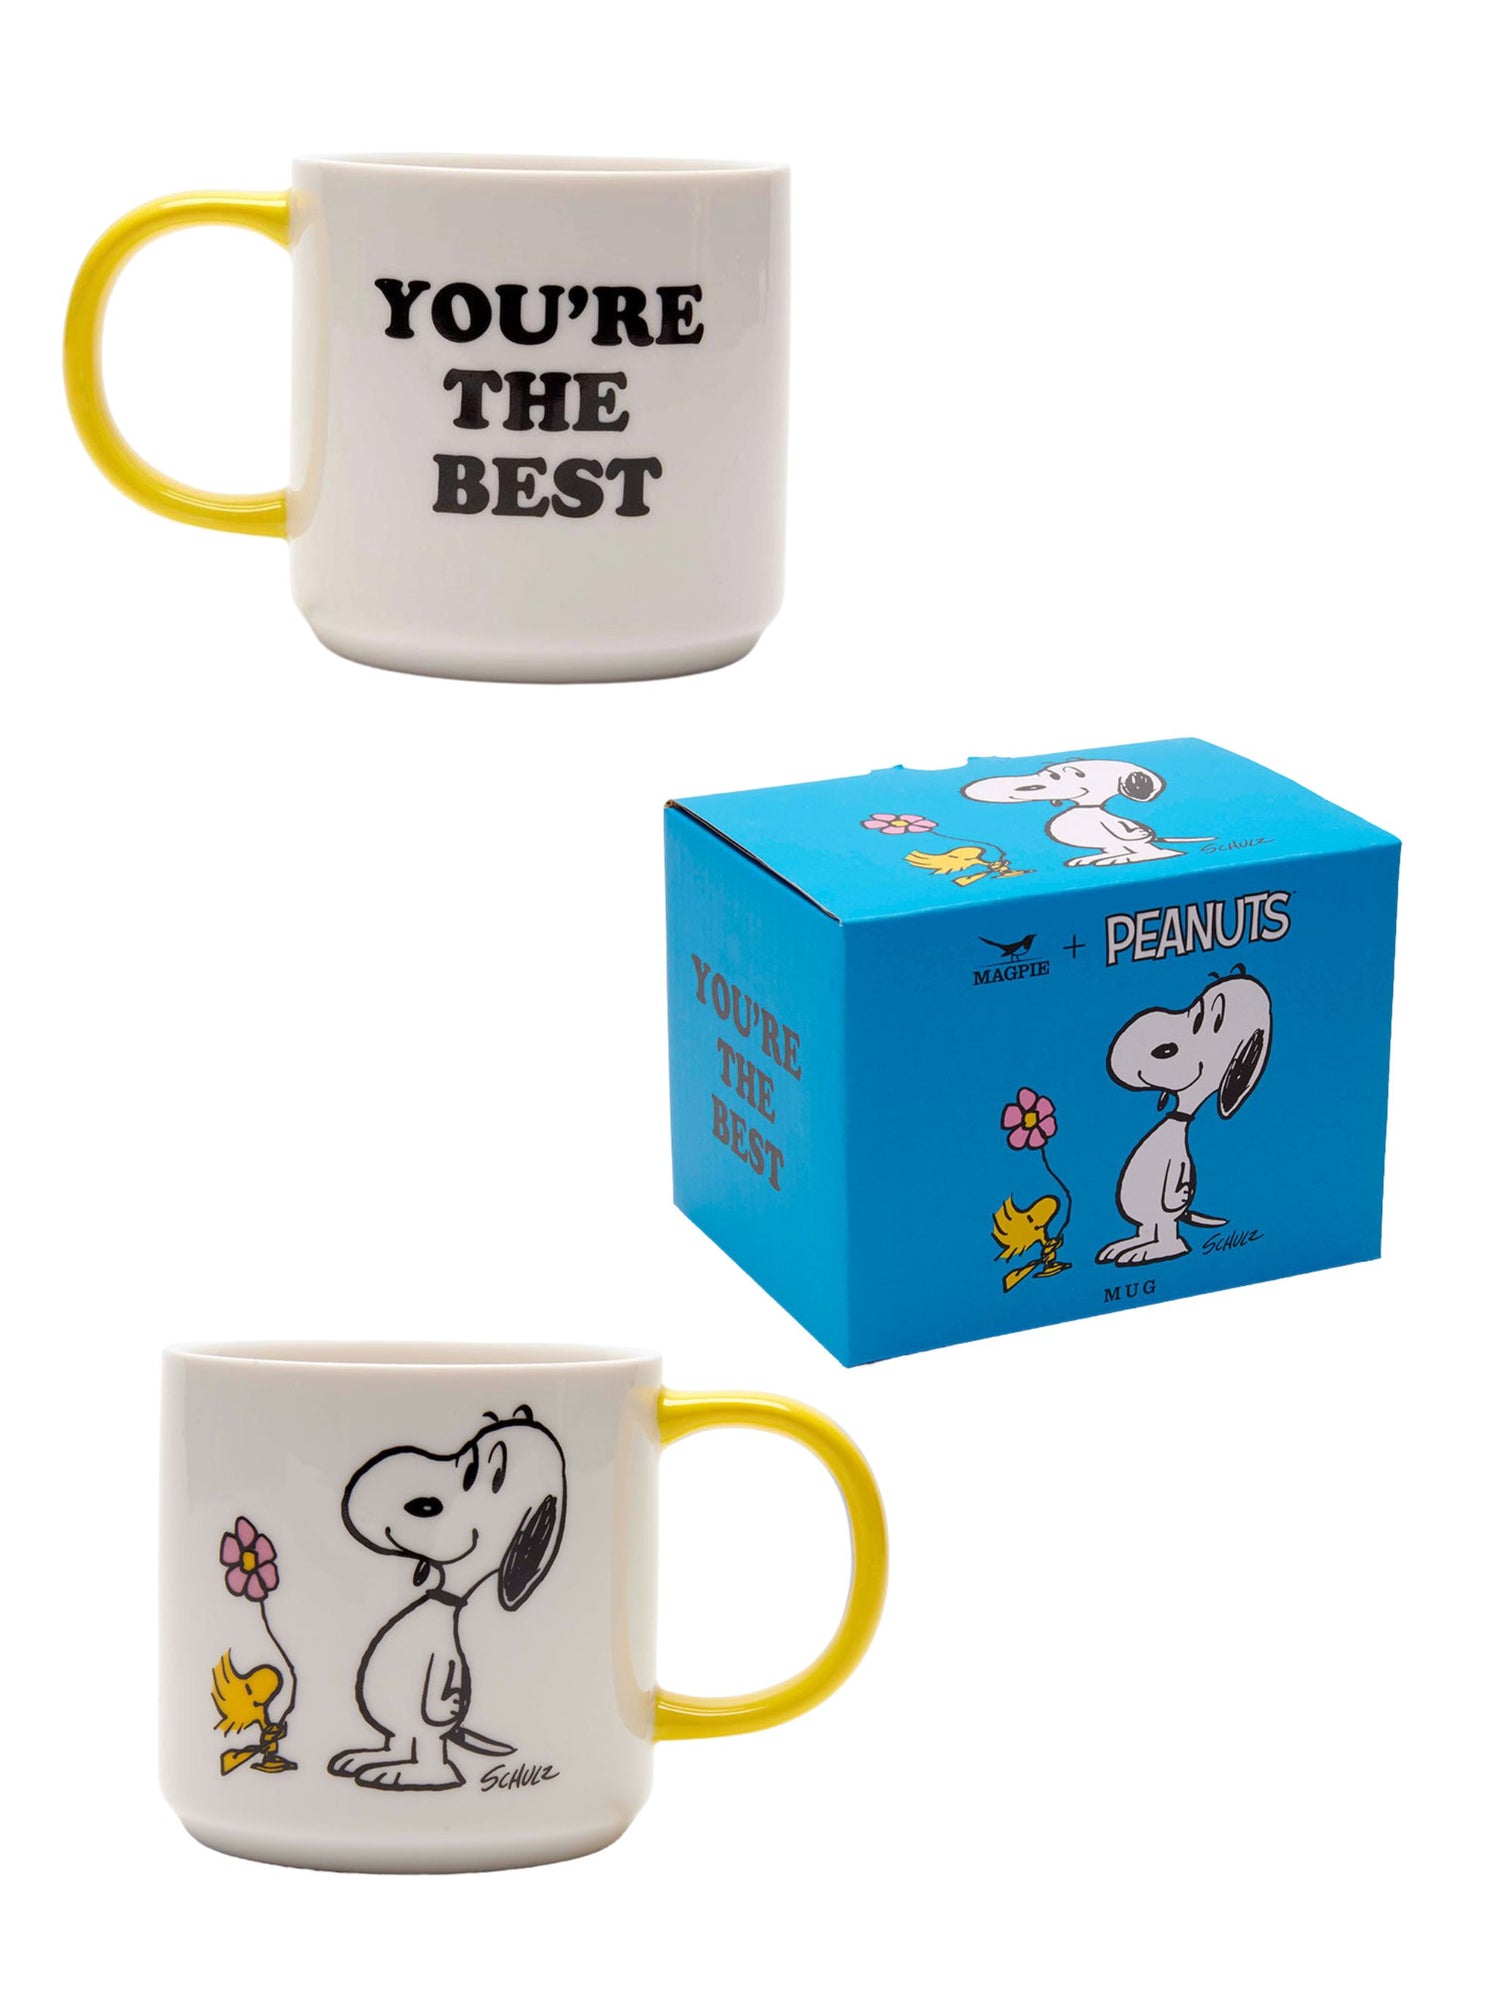 Peanuts Mug, You're The Best